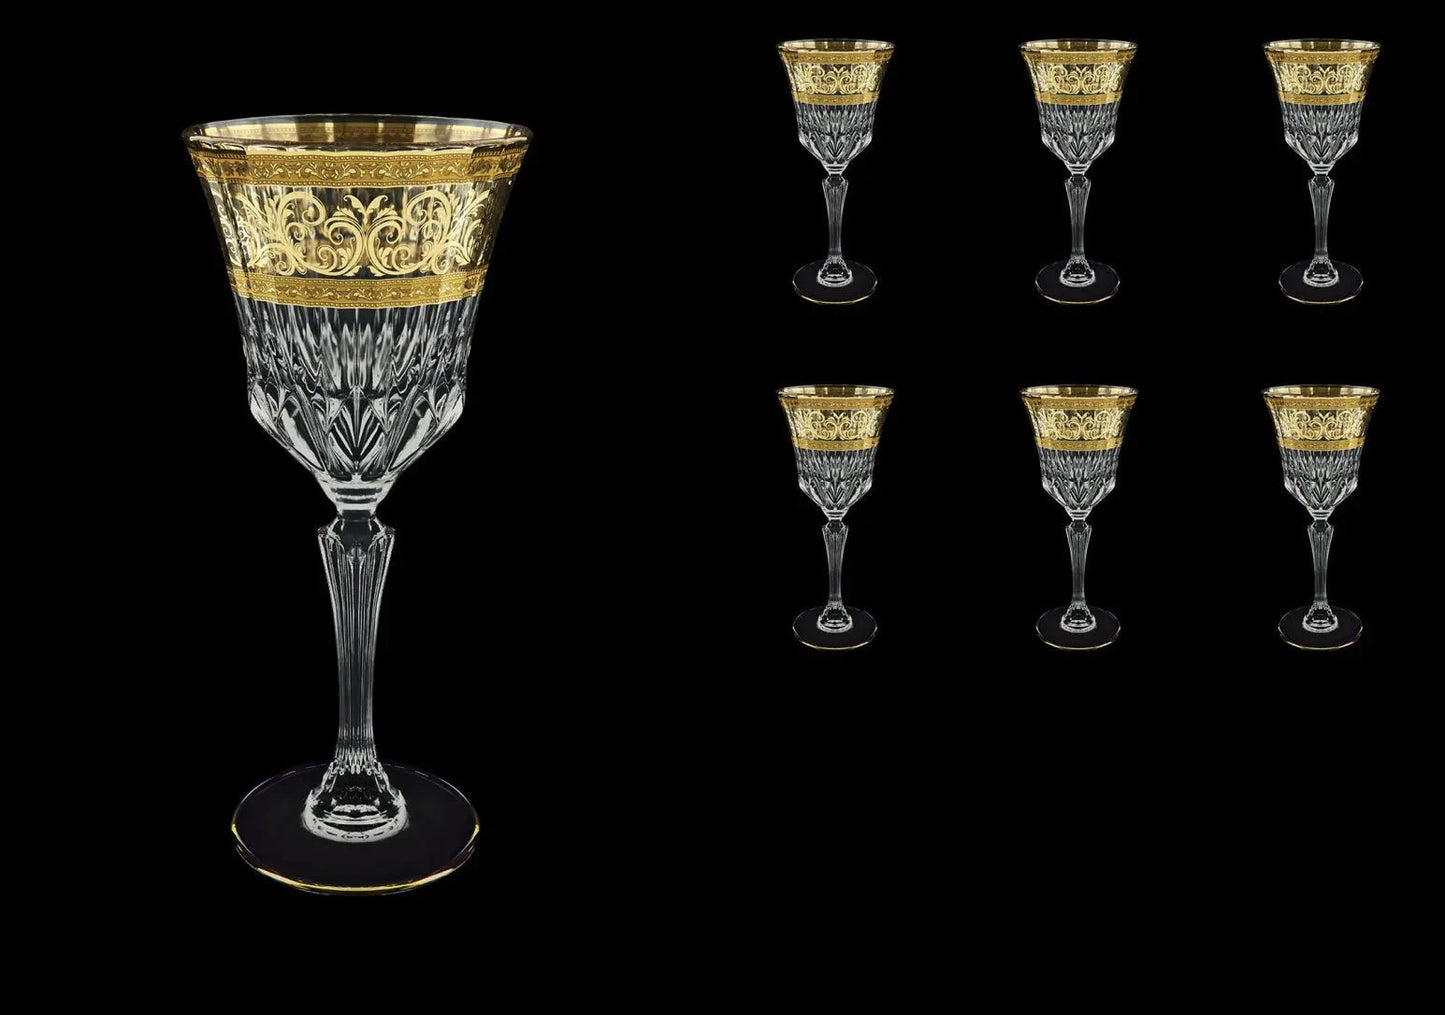 Wine glasses 280ml 6pcs "Adagio Allegro" in golden light decor by Astra Gold.